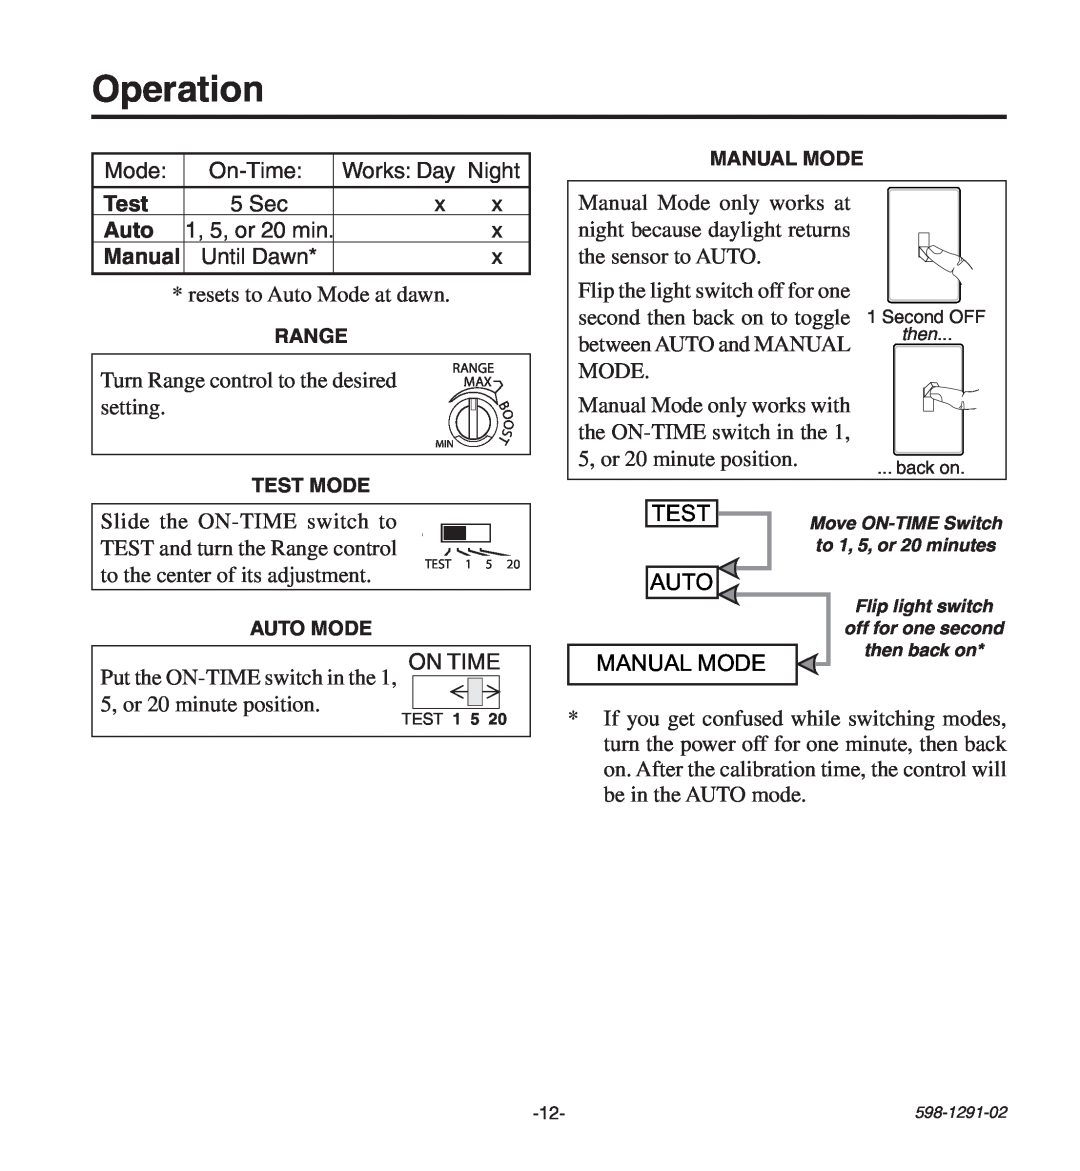 Heath Zenith UT-9260-WH, UT-9260-BZ manual Operation, Test, Auto, Manual Mode 